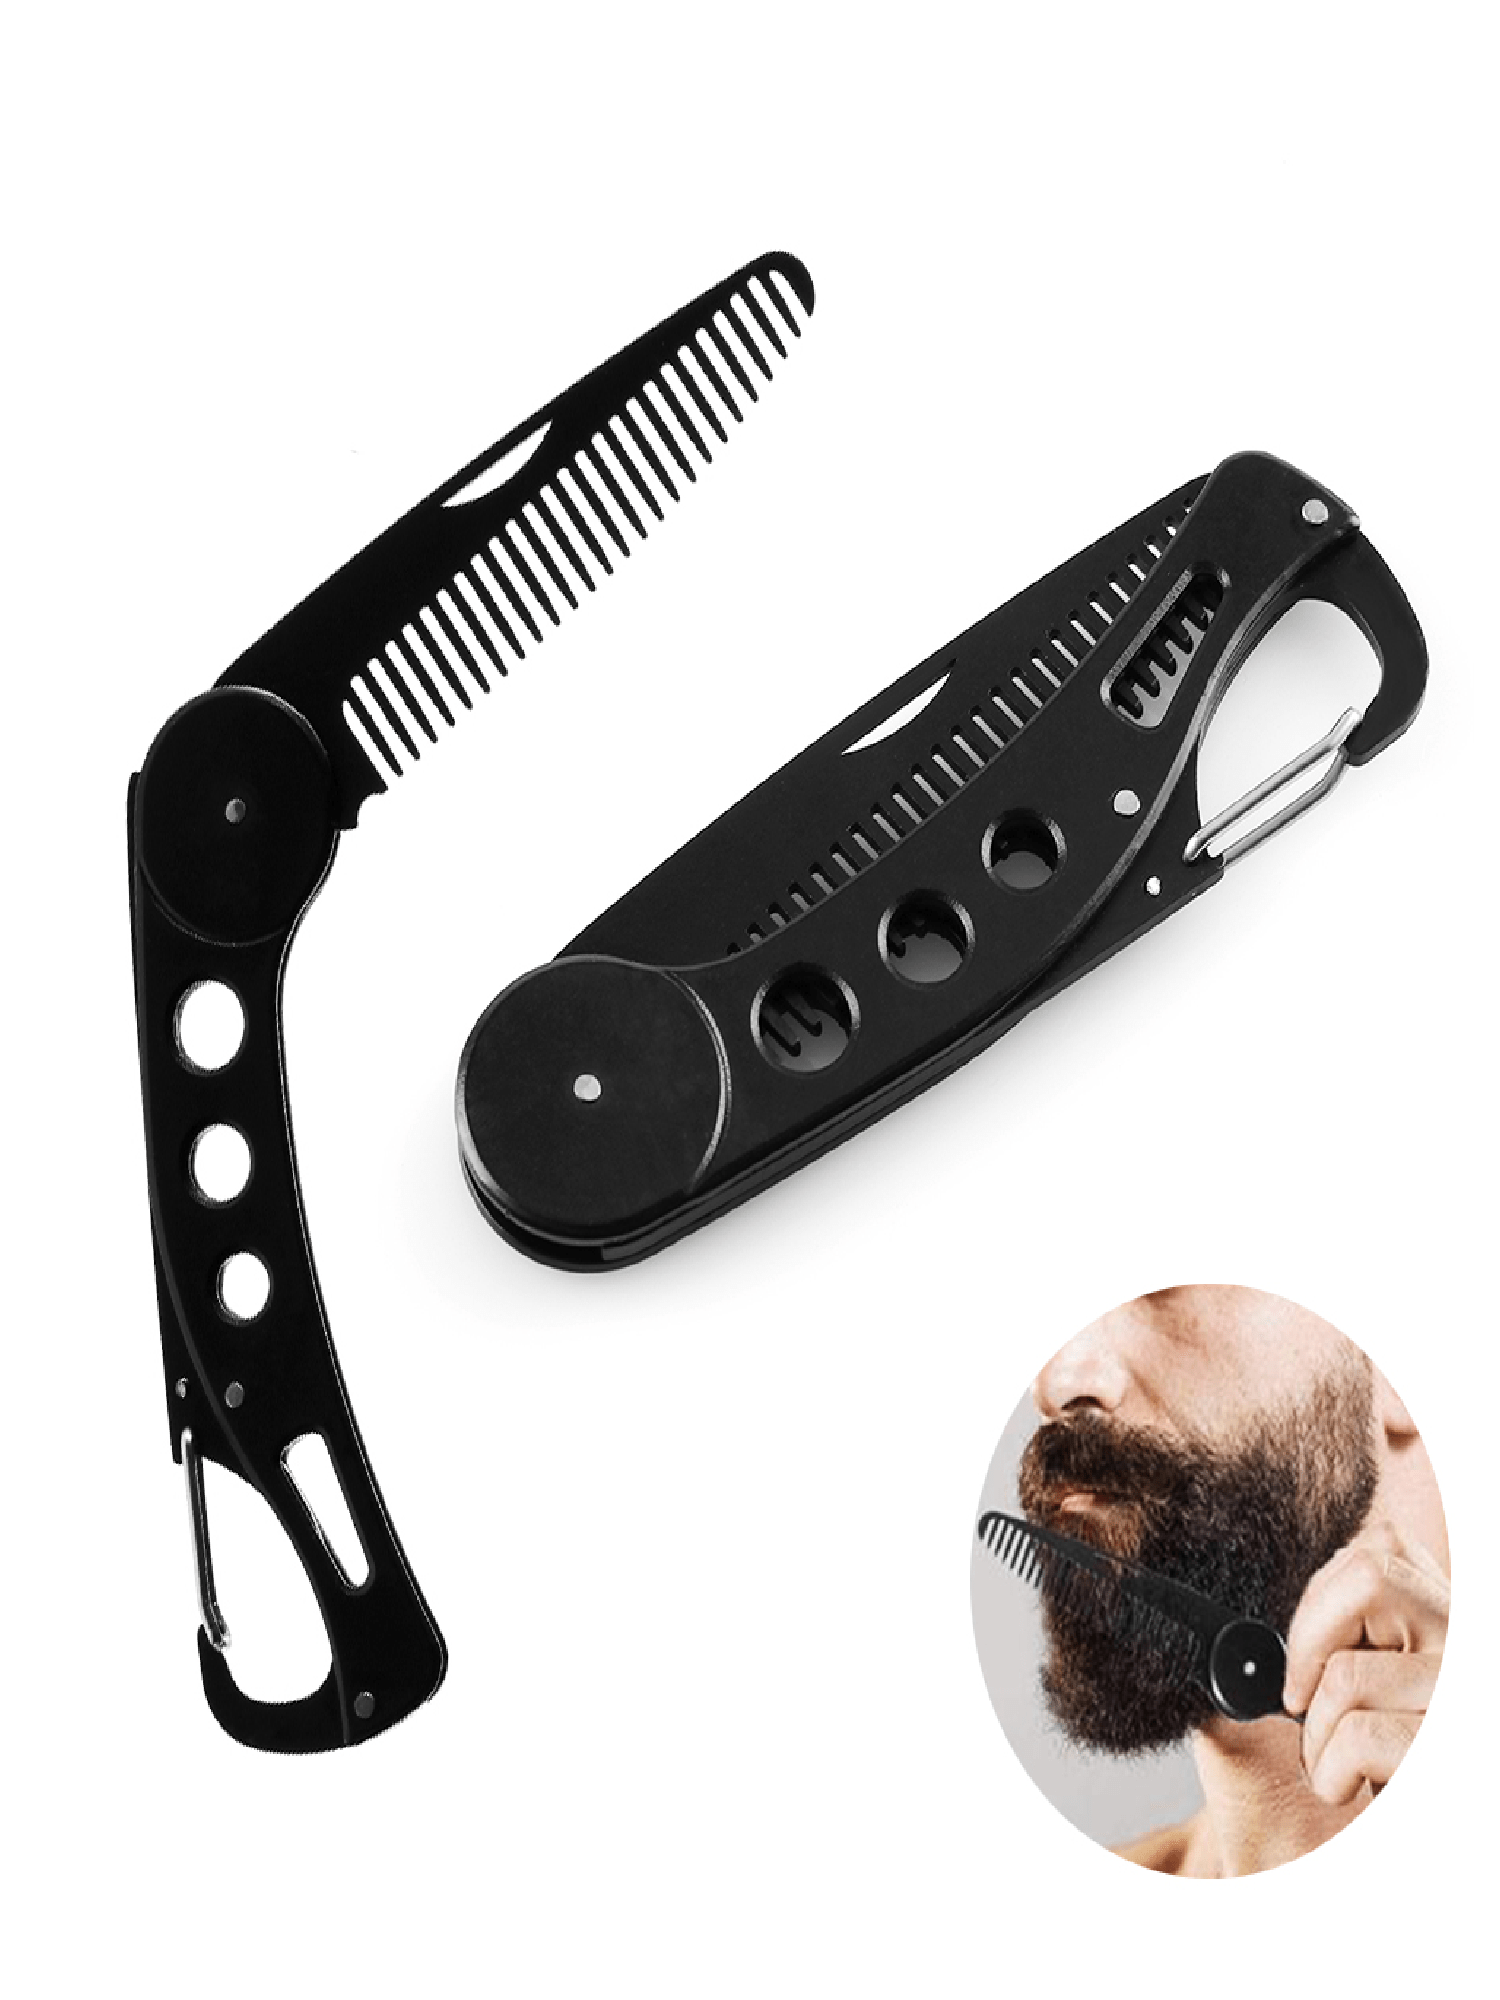 Pocket Beard Comb